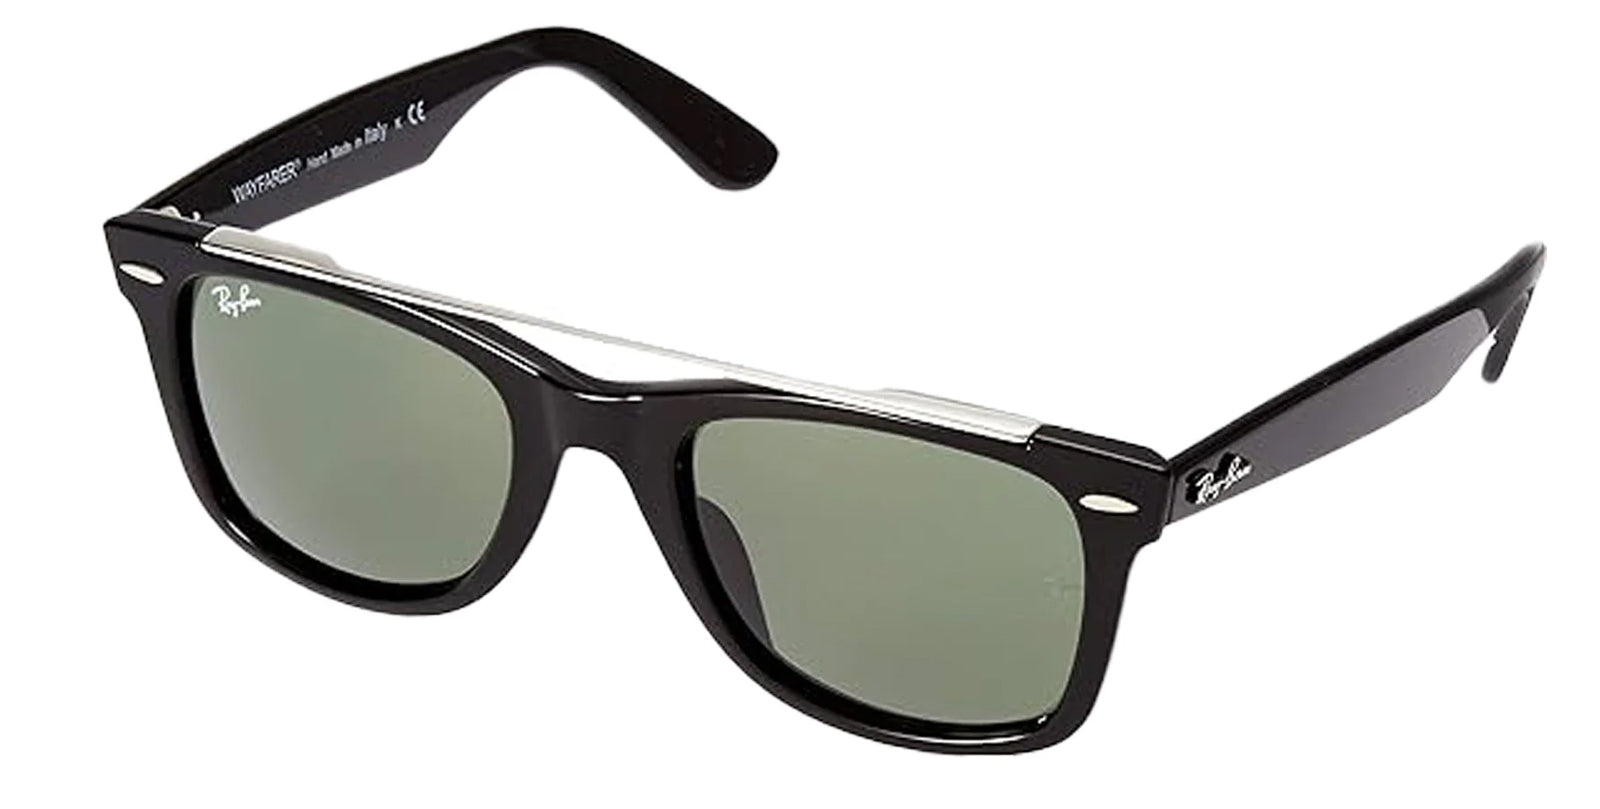 Ray-Ban Wayfarer Double Bridge Adult Lifestyle Sunglasses